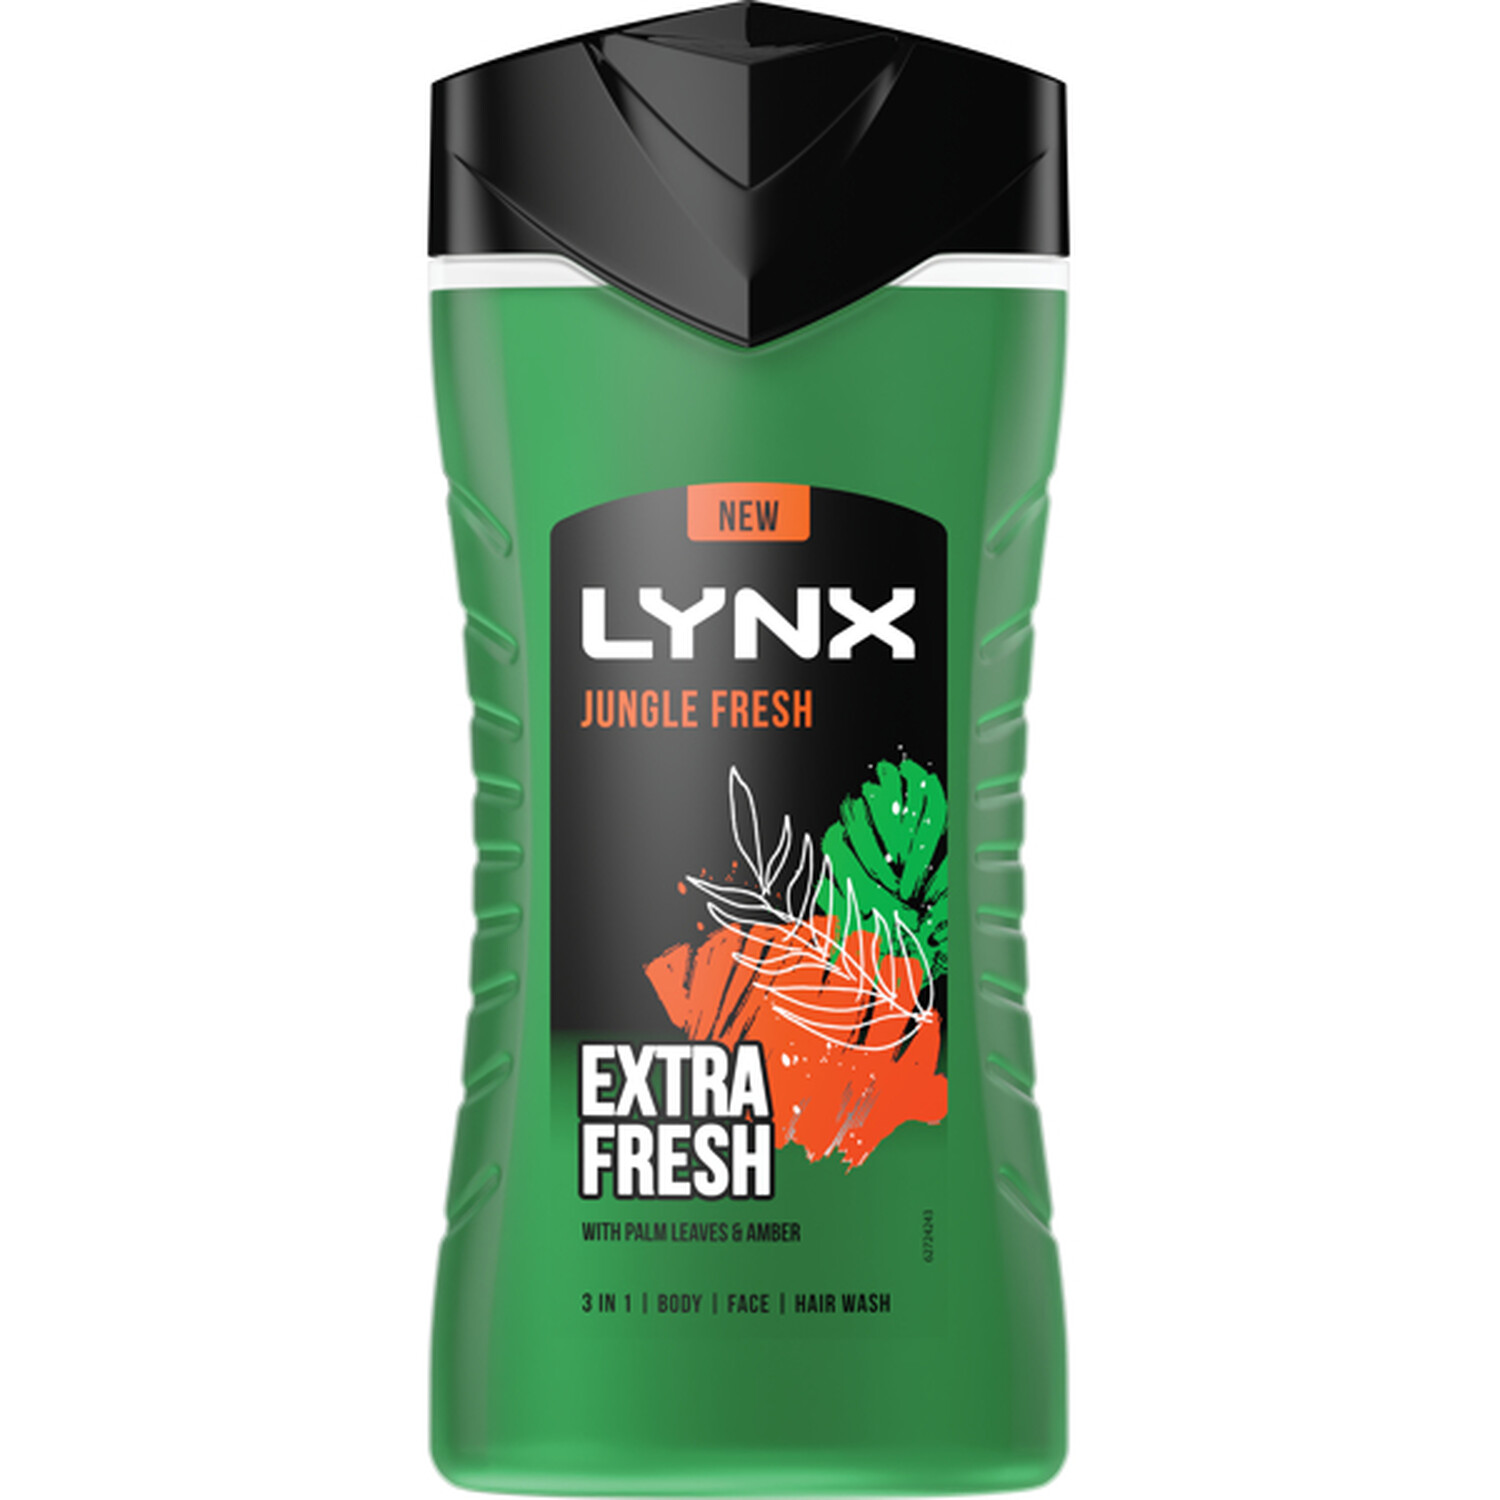 Lynx Jungle Fresh Extra Fresh Shower Gel 225ml - Green Image